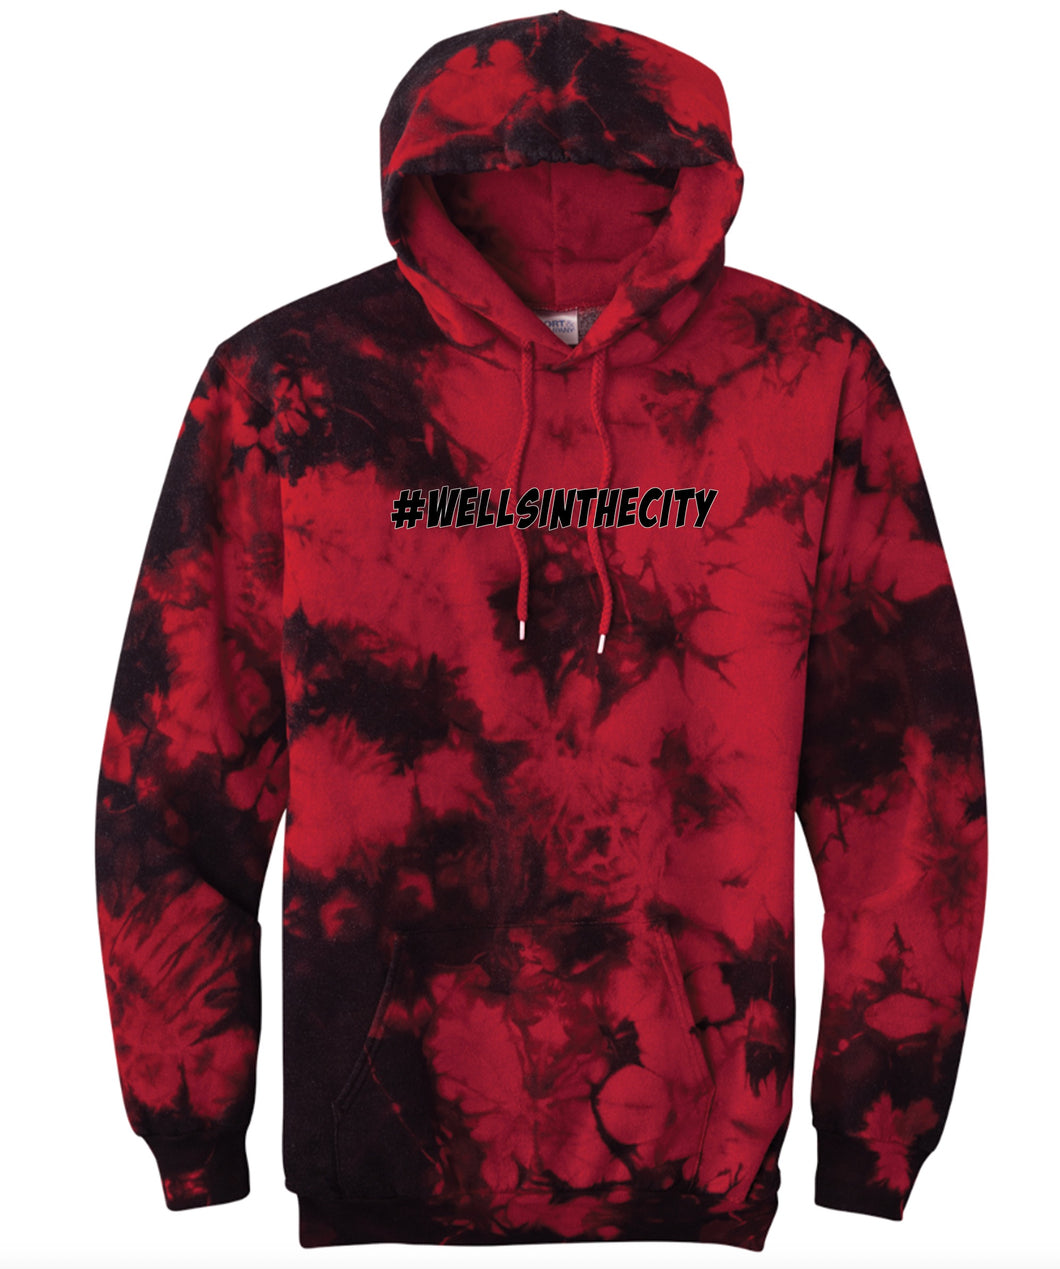 Wellsinthecity hoodie